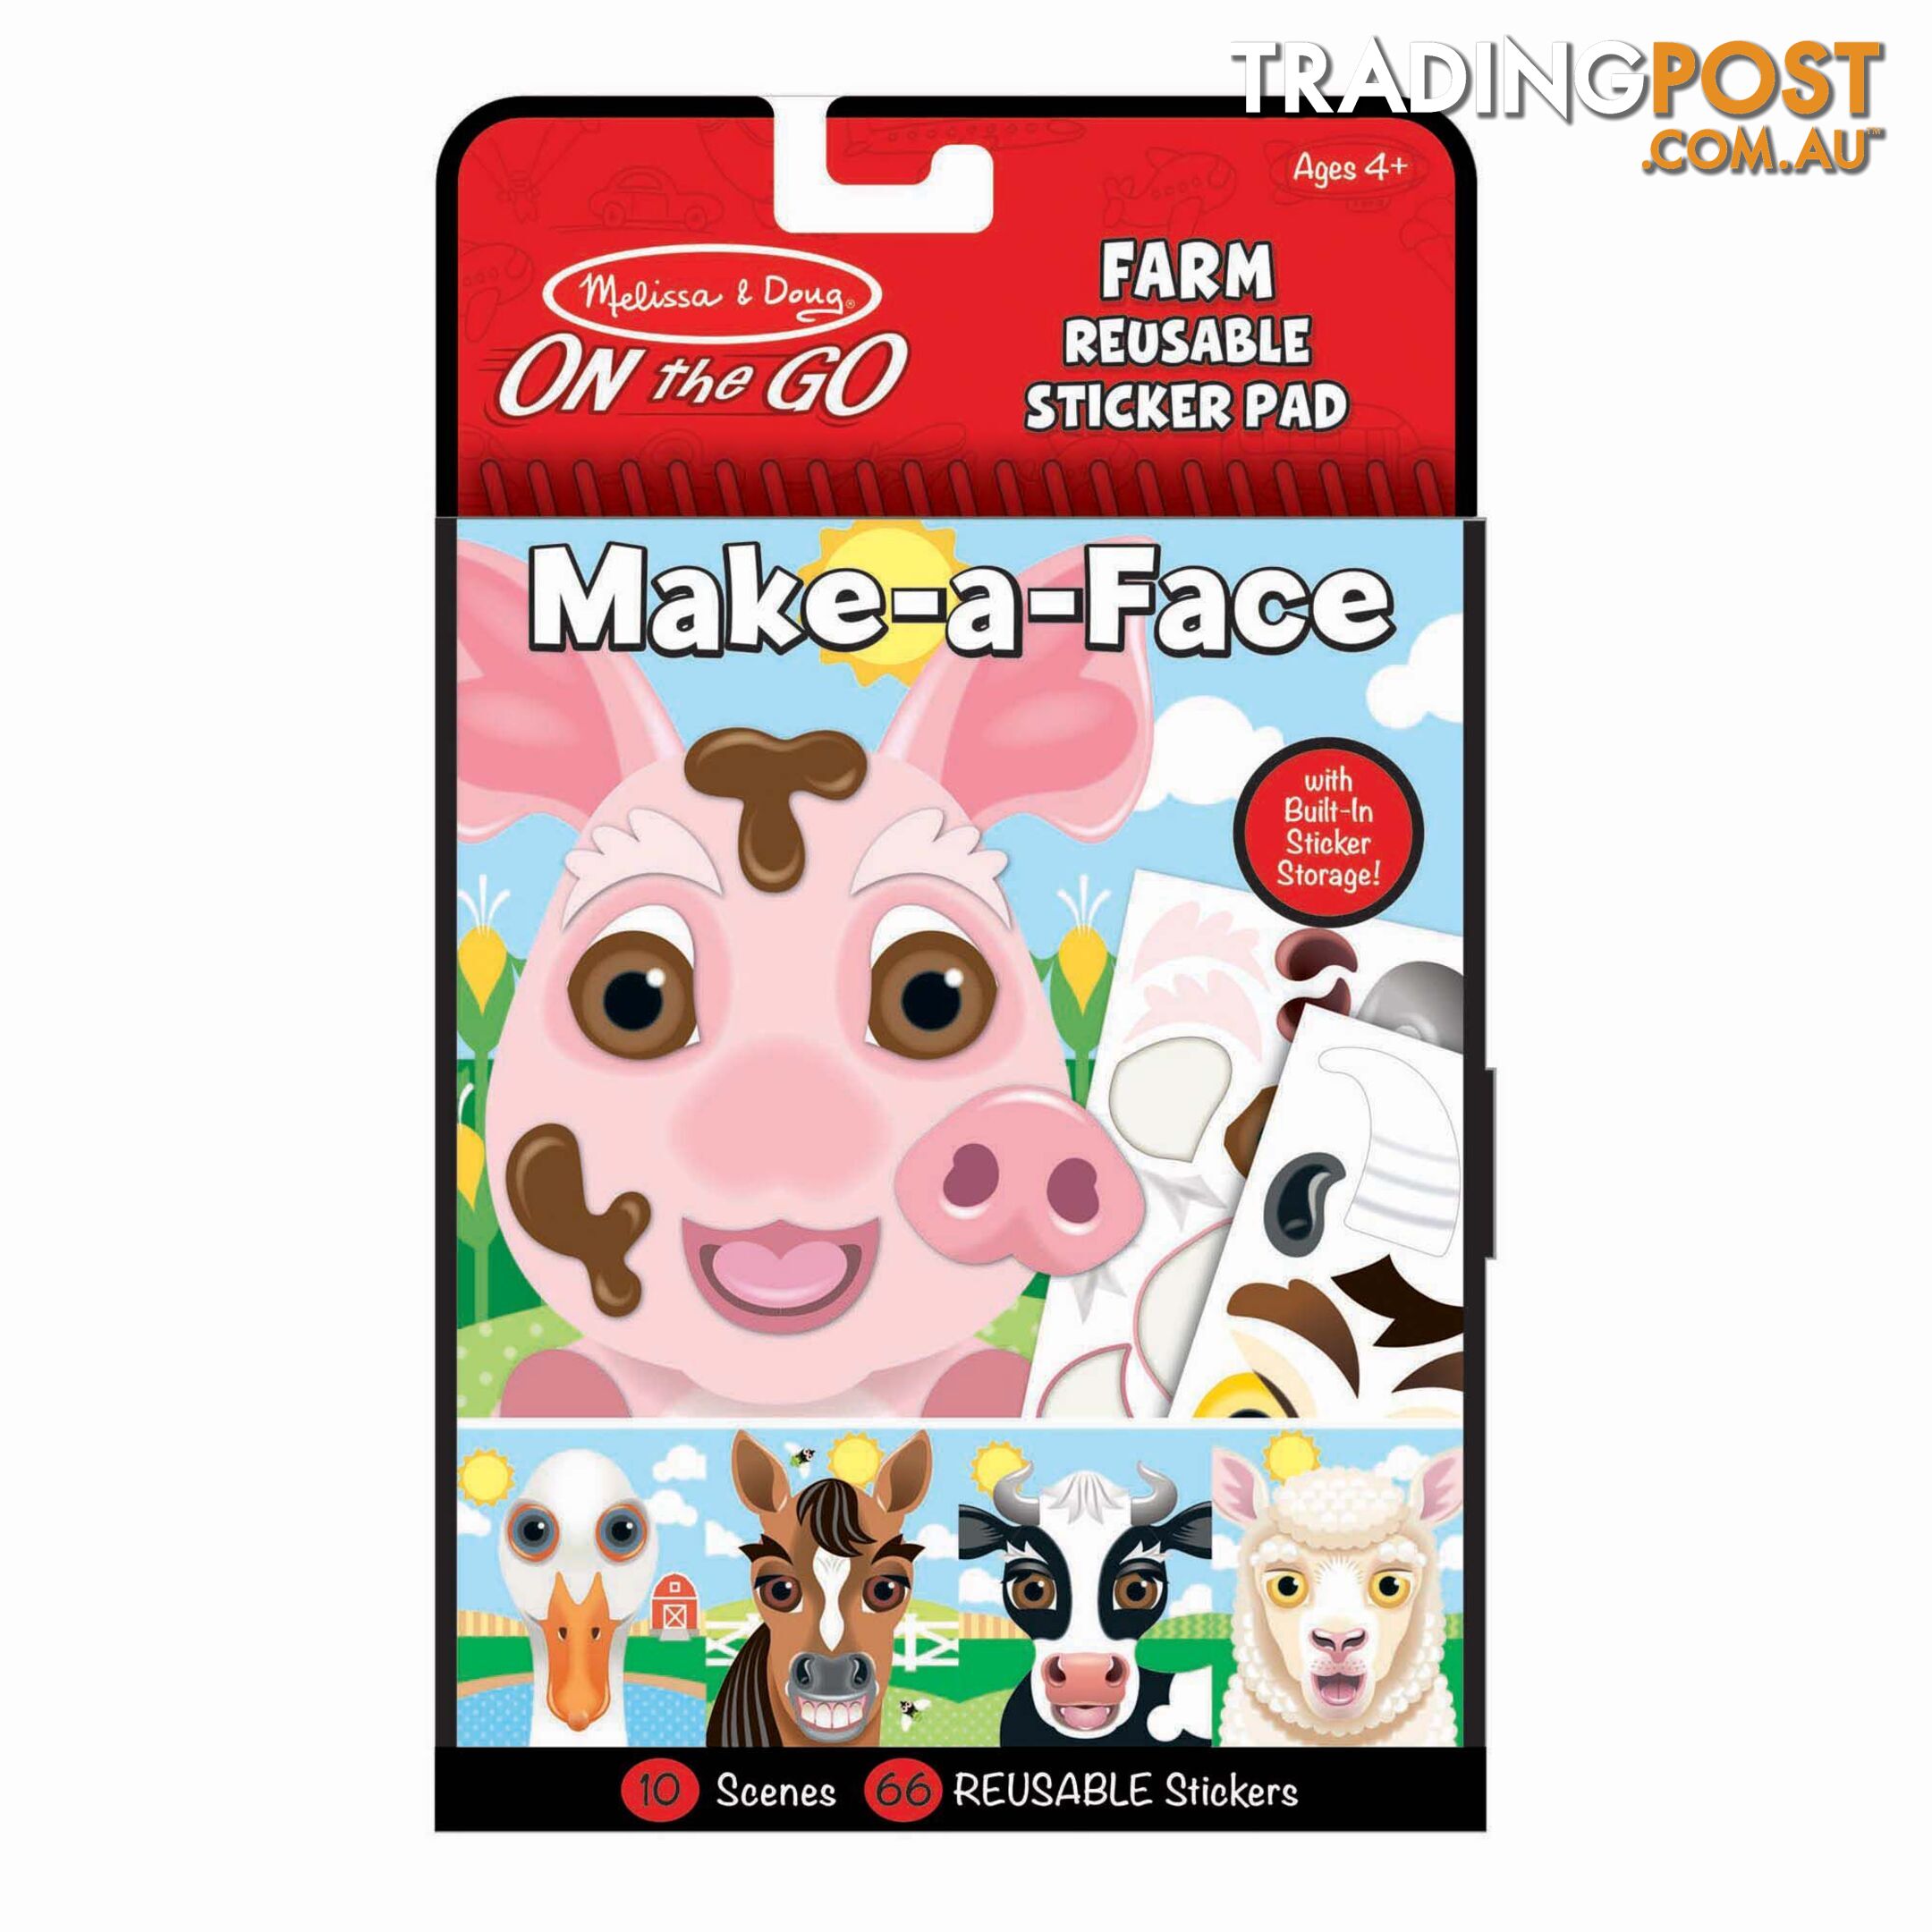 Melissa & Doug - Make-a-face - Farm Reusable Sticker Pad - On The Go Travel Activity Mdmnd30511 - 0000772305112